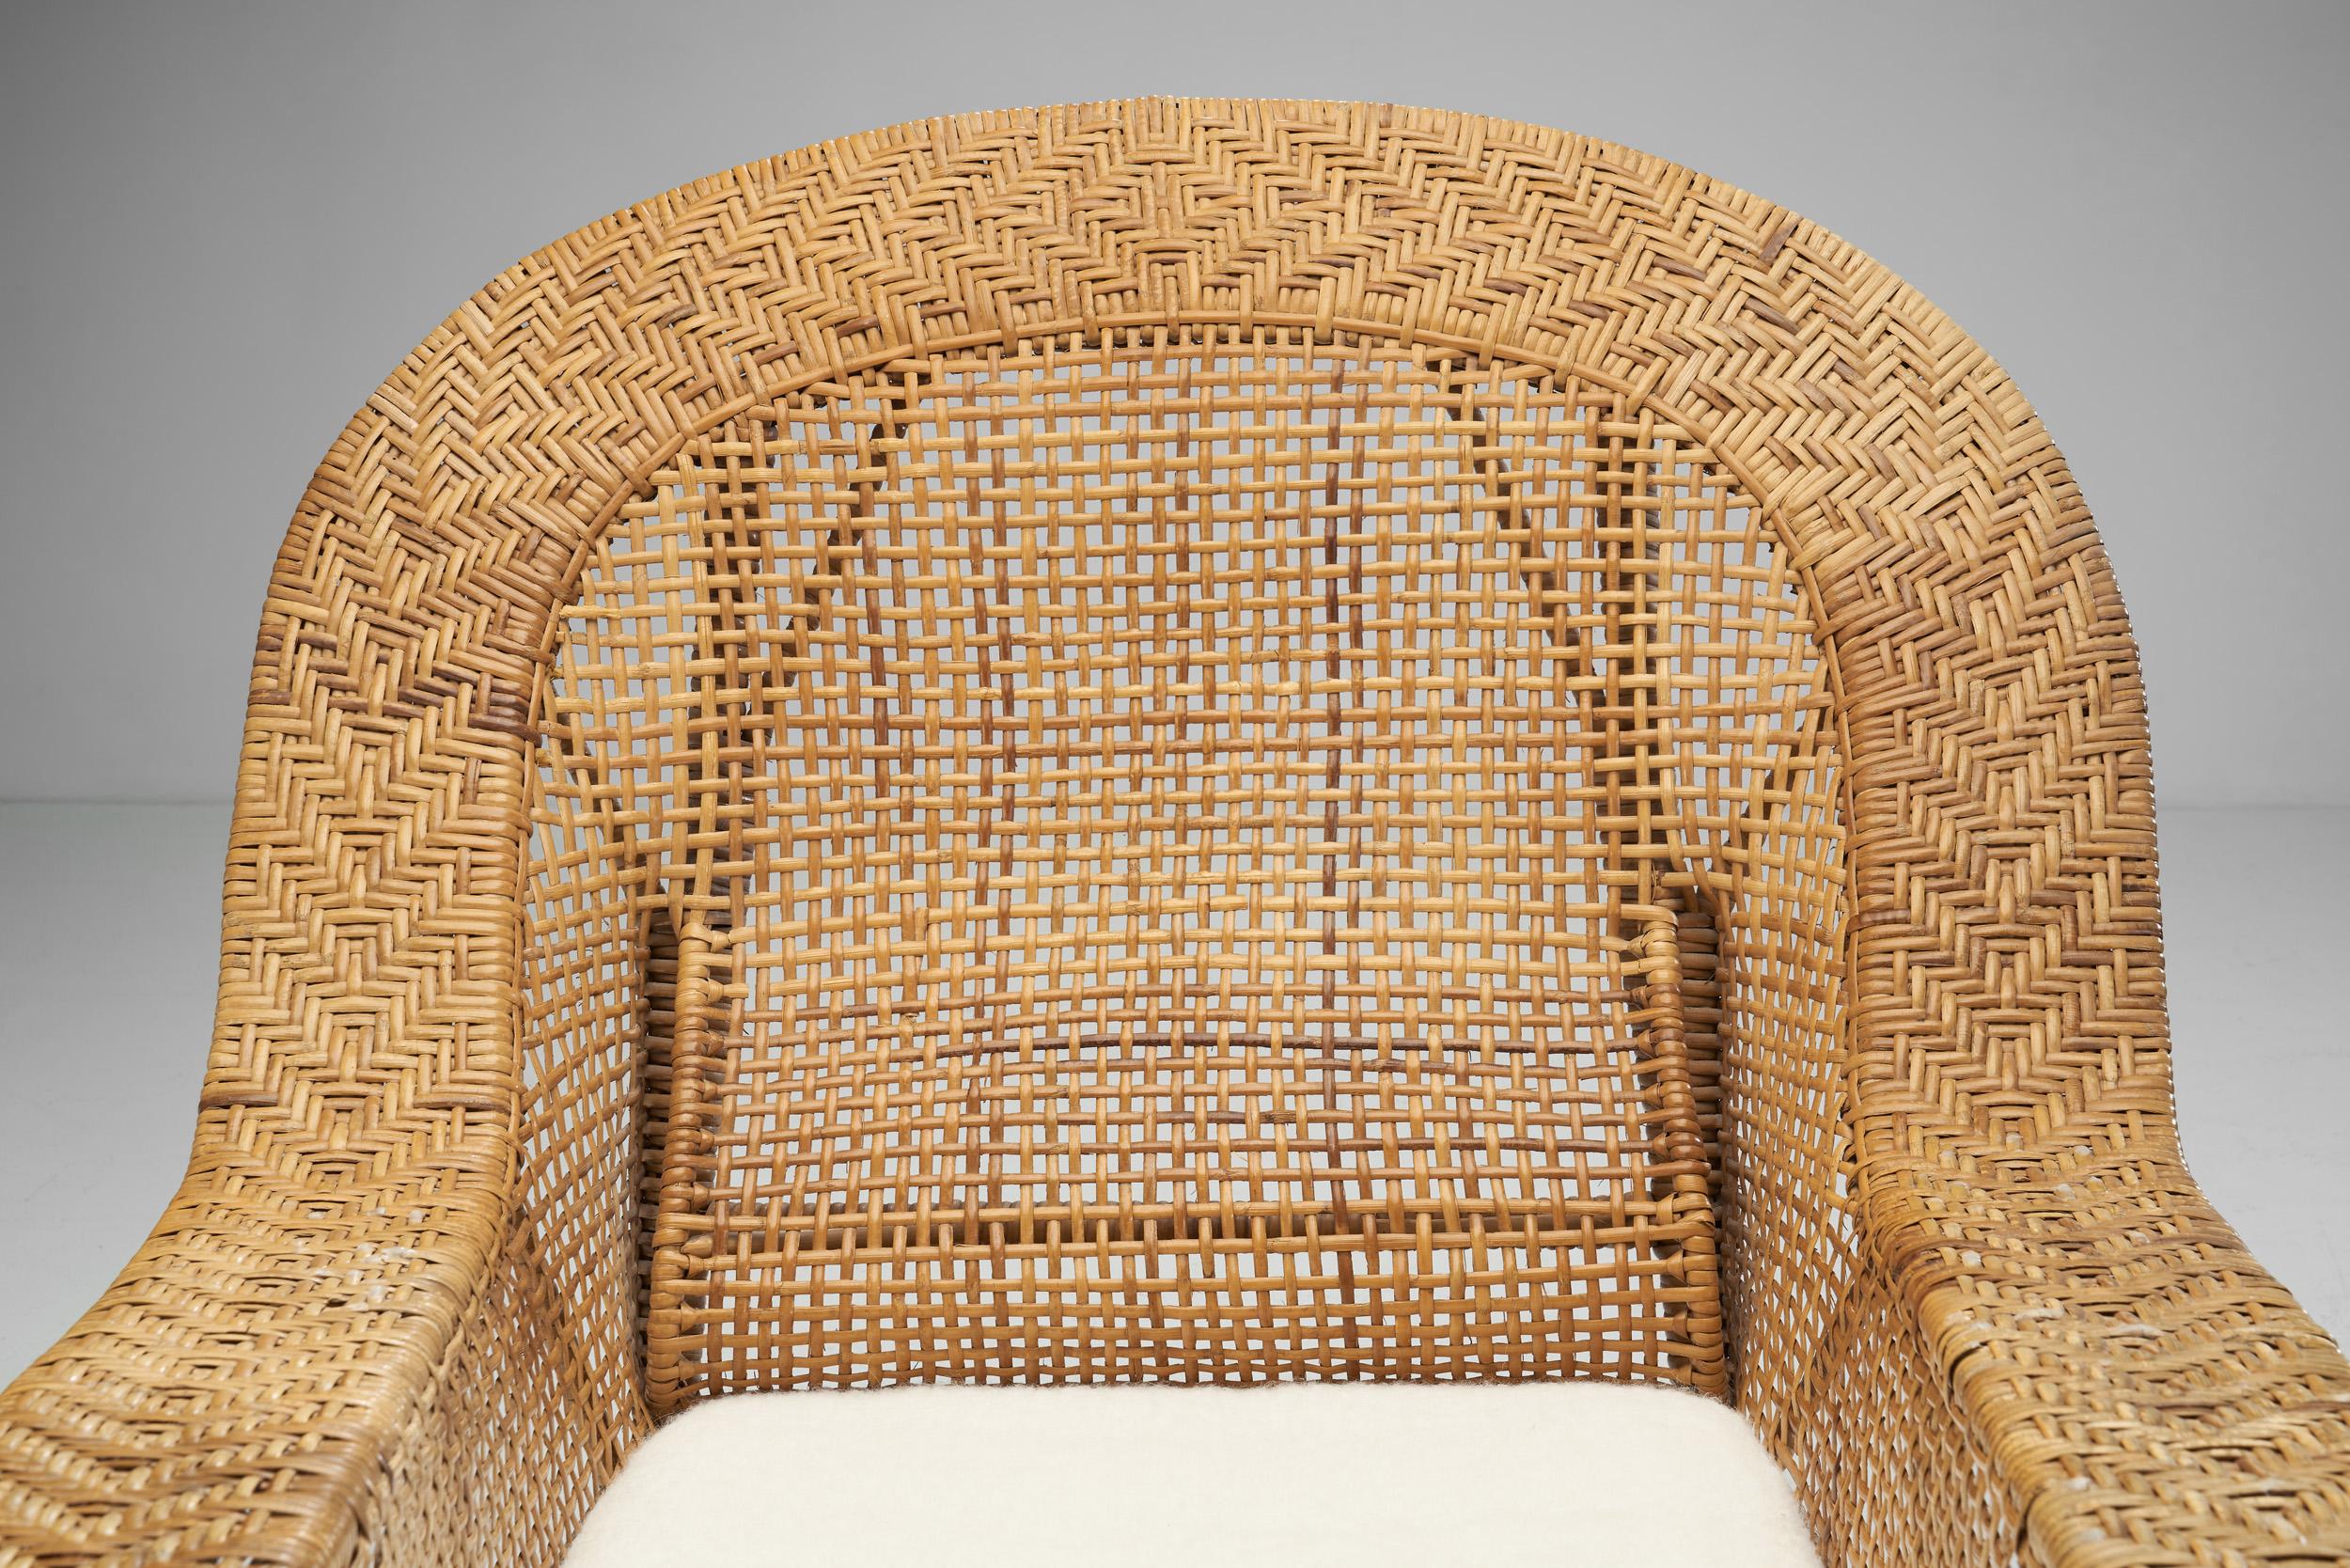 Fabric Kay Fisker “Canton” Woven Wicker Lounge Chair for Robert Wengler, Denmark 1950s For Sale